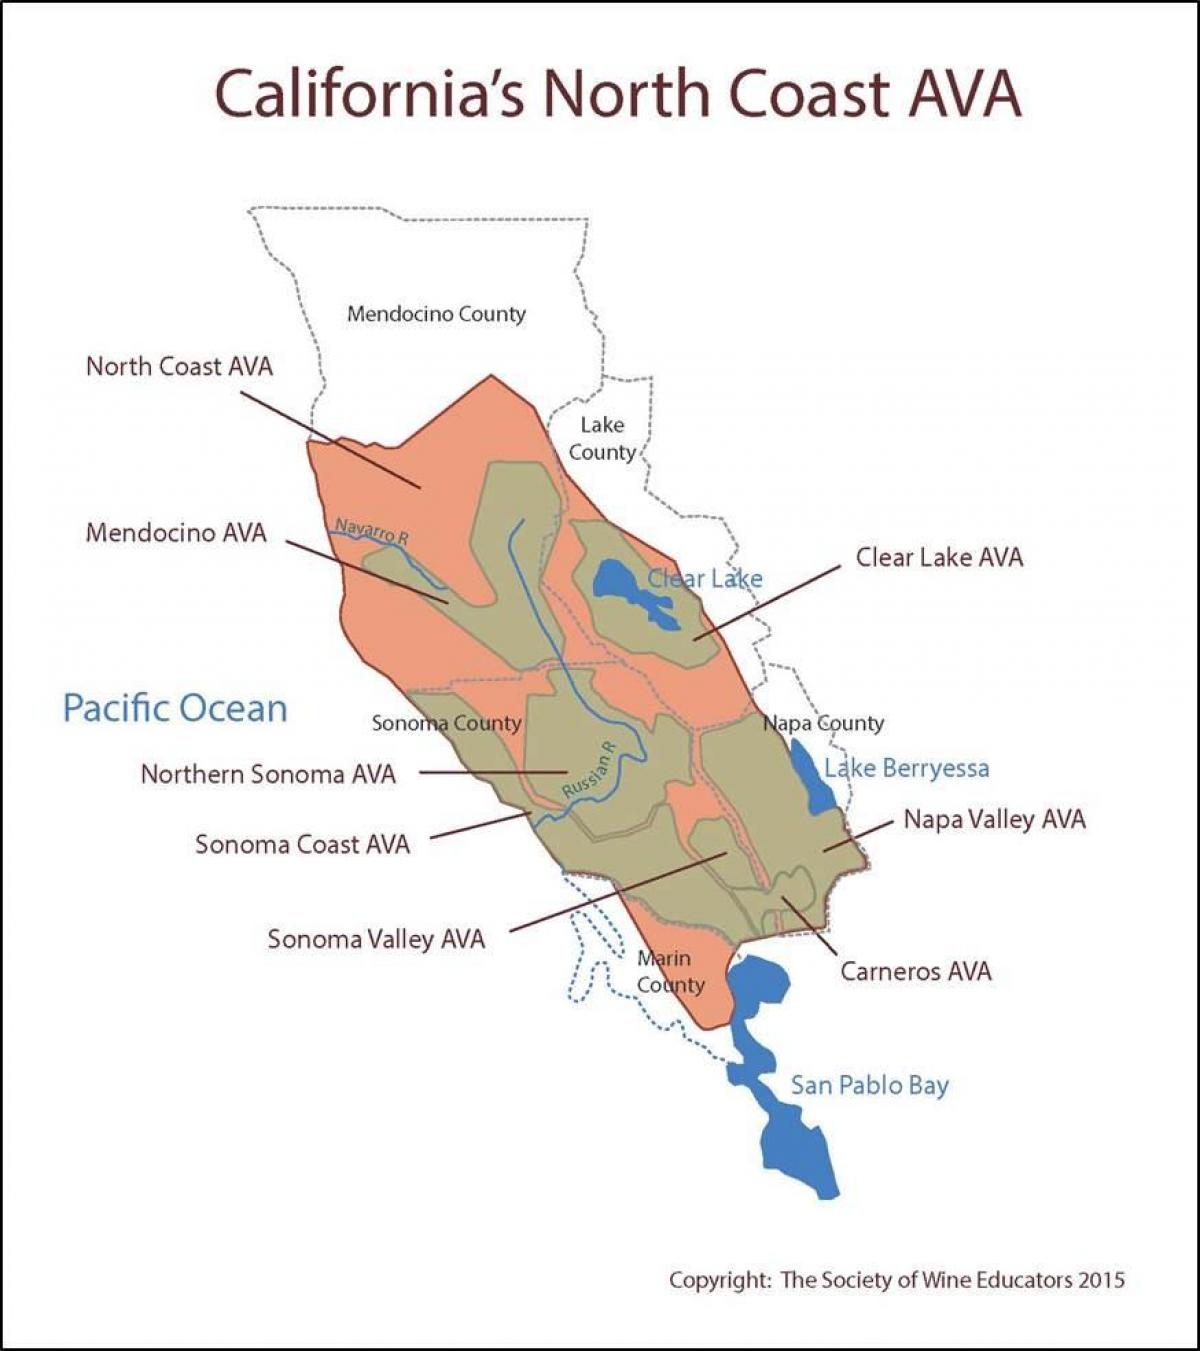 Karta kalifornijske obale sjeverno od San Francisca